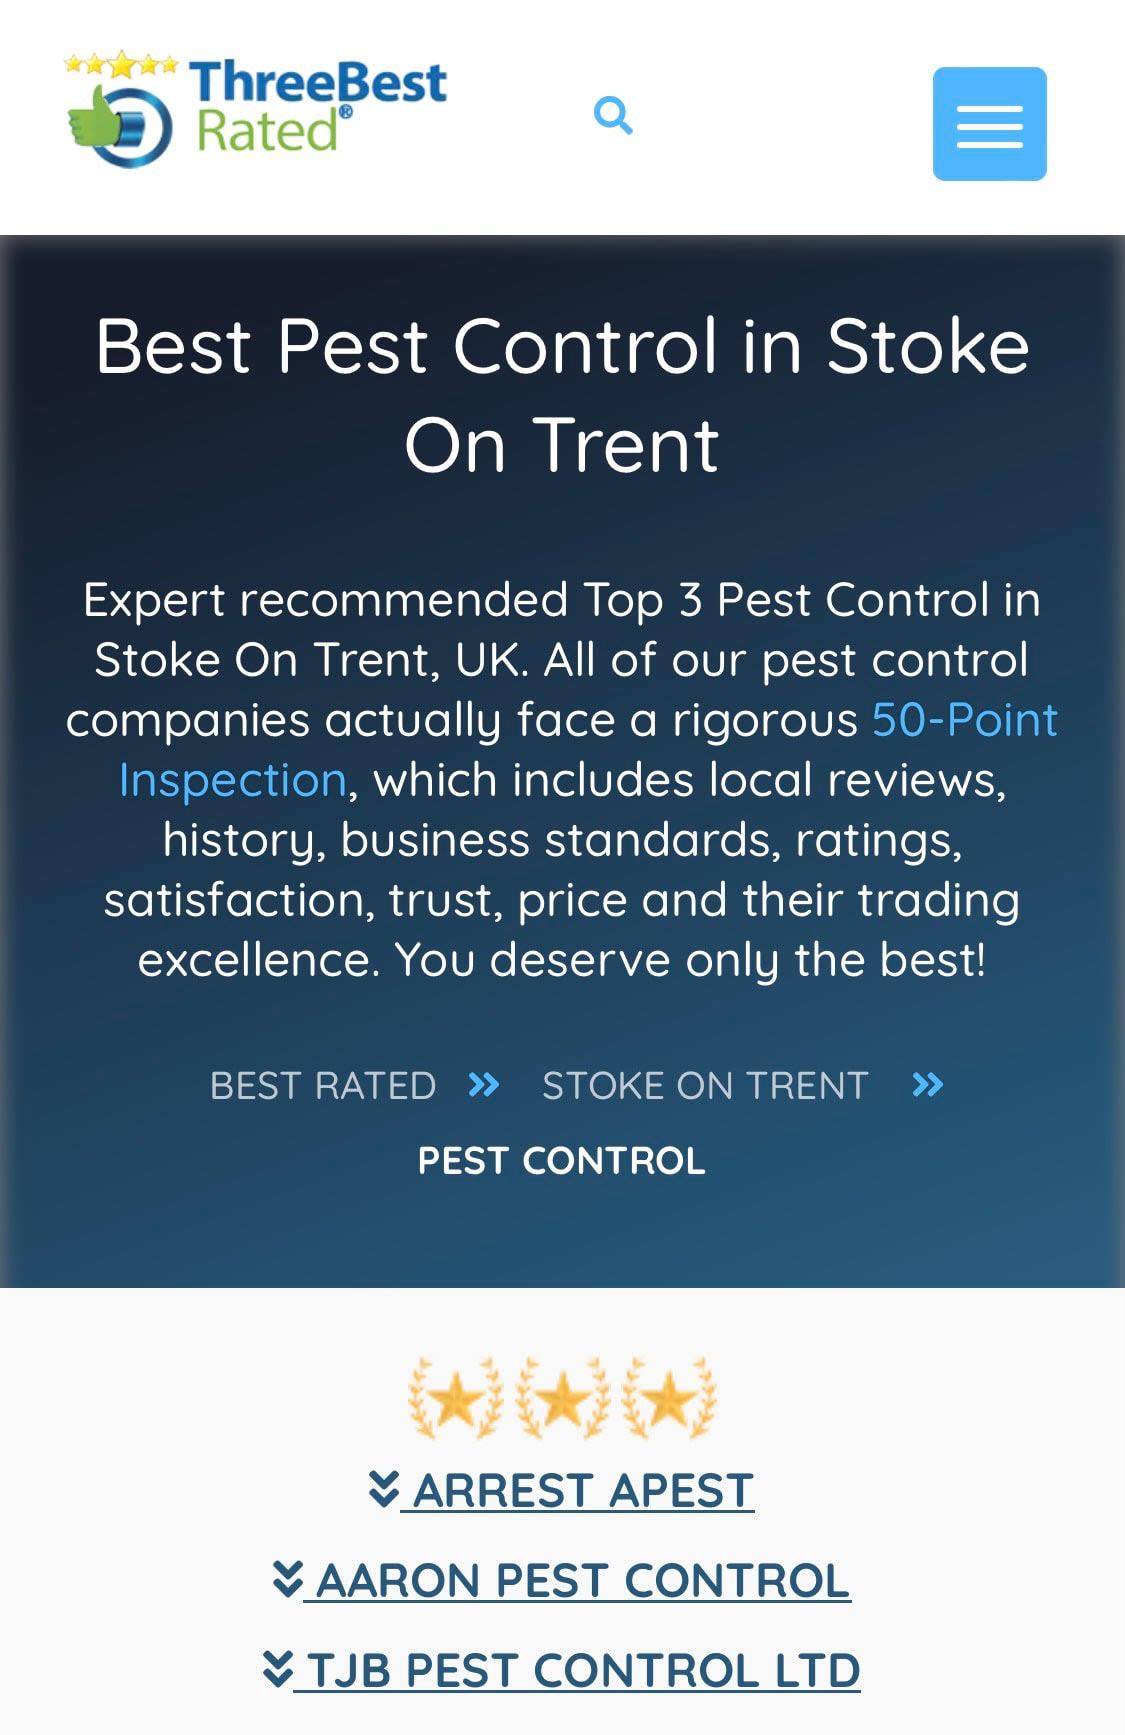 Aaron Pest Control Stoke-On-Trent 01782 310095